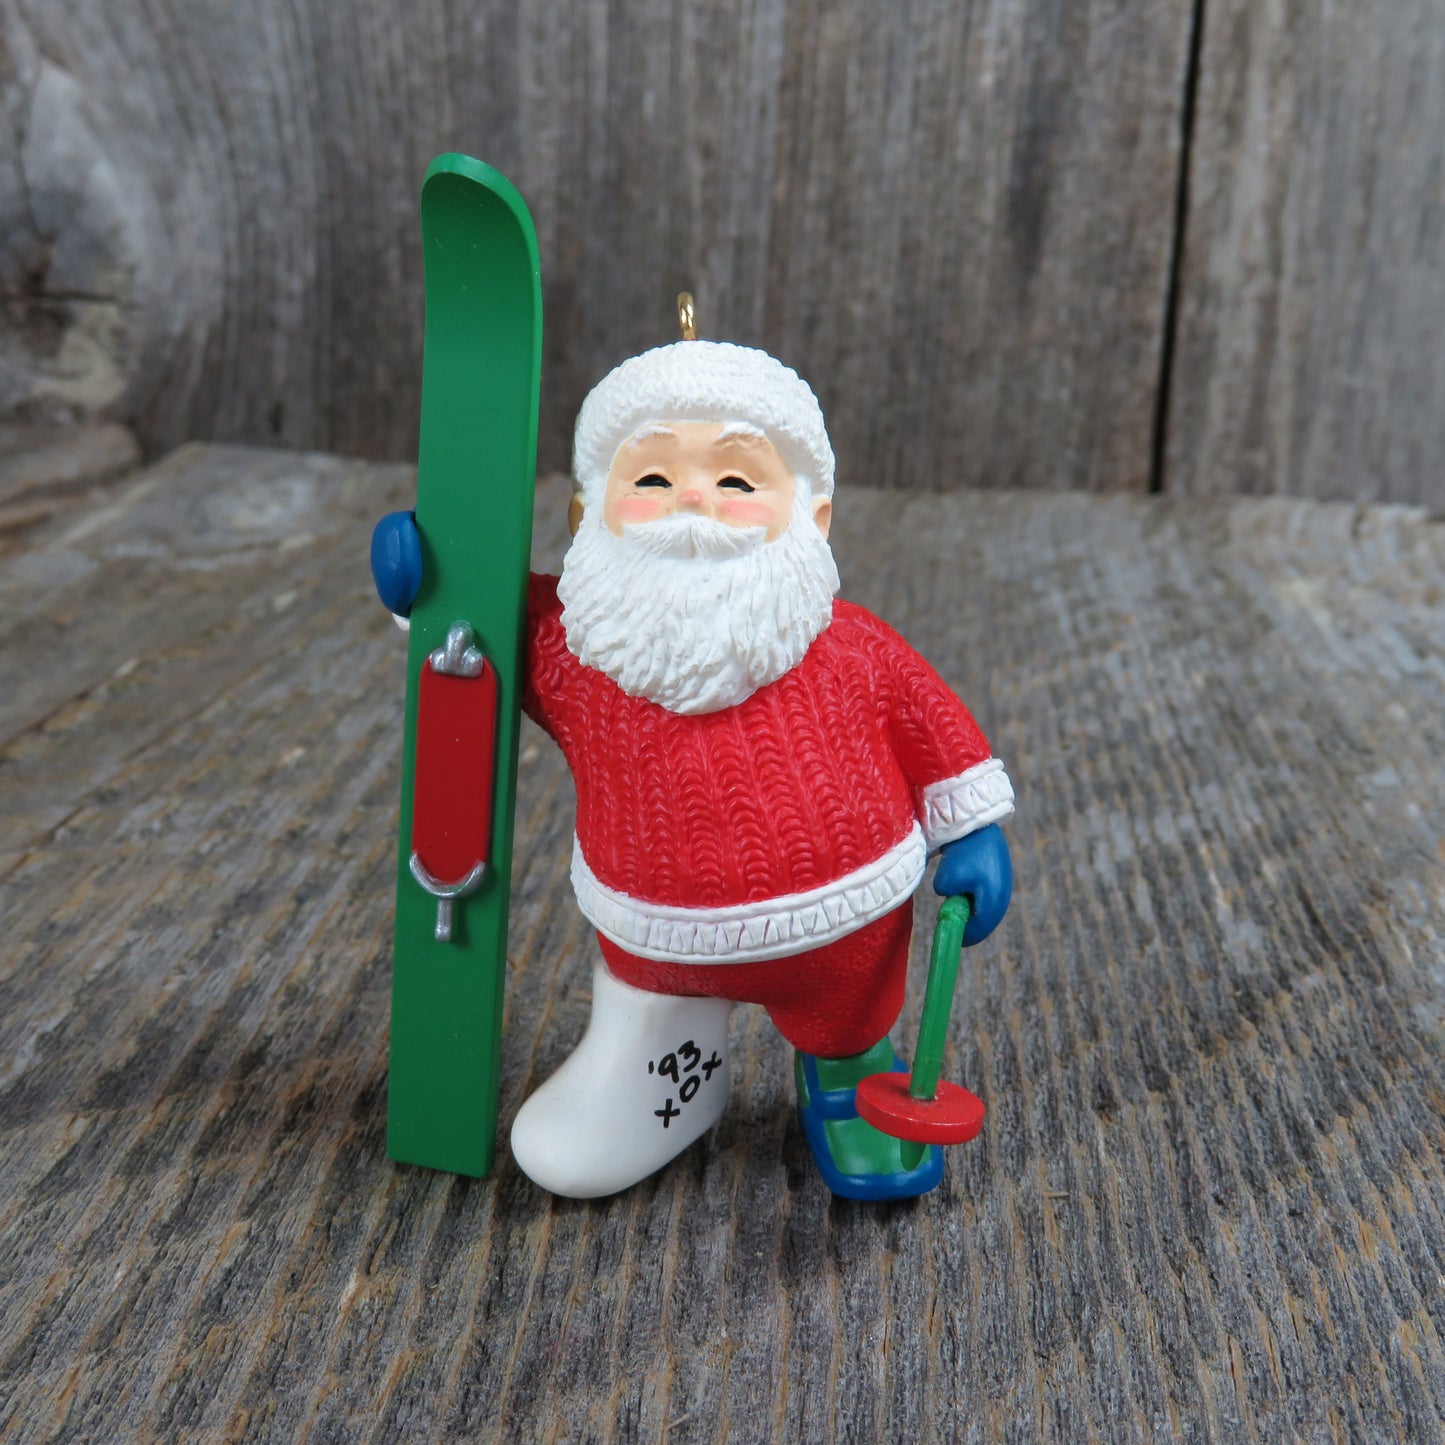 Hallmark Ornament Santa Skiing Vintage 1993 Christmas Break Accident Broken Leg - At Grandma's Table